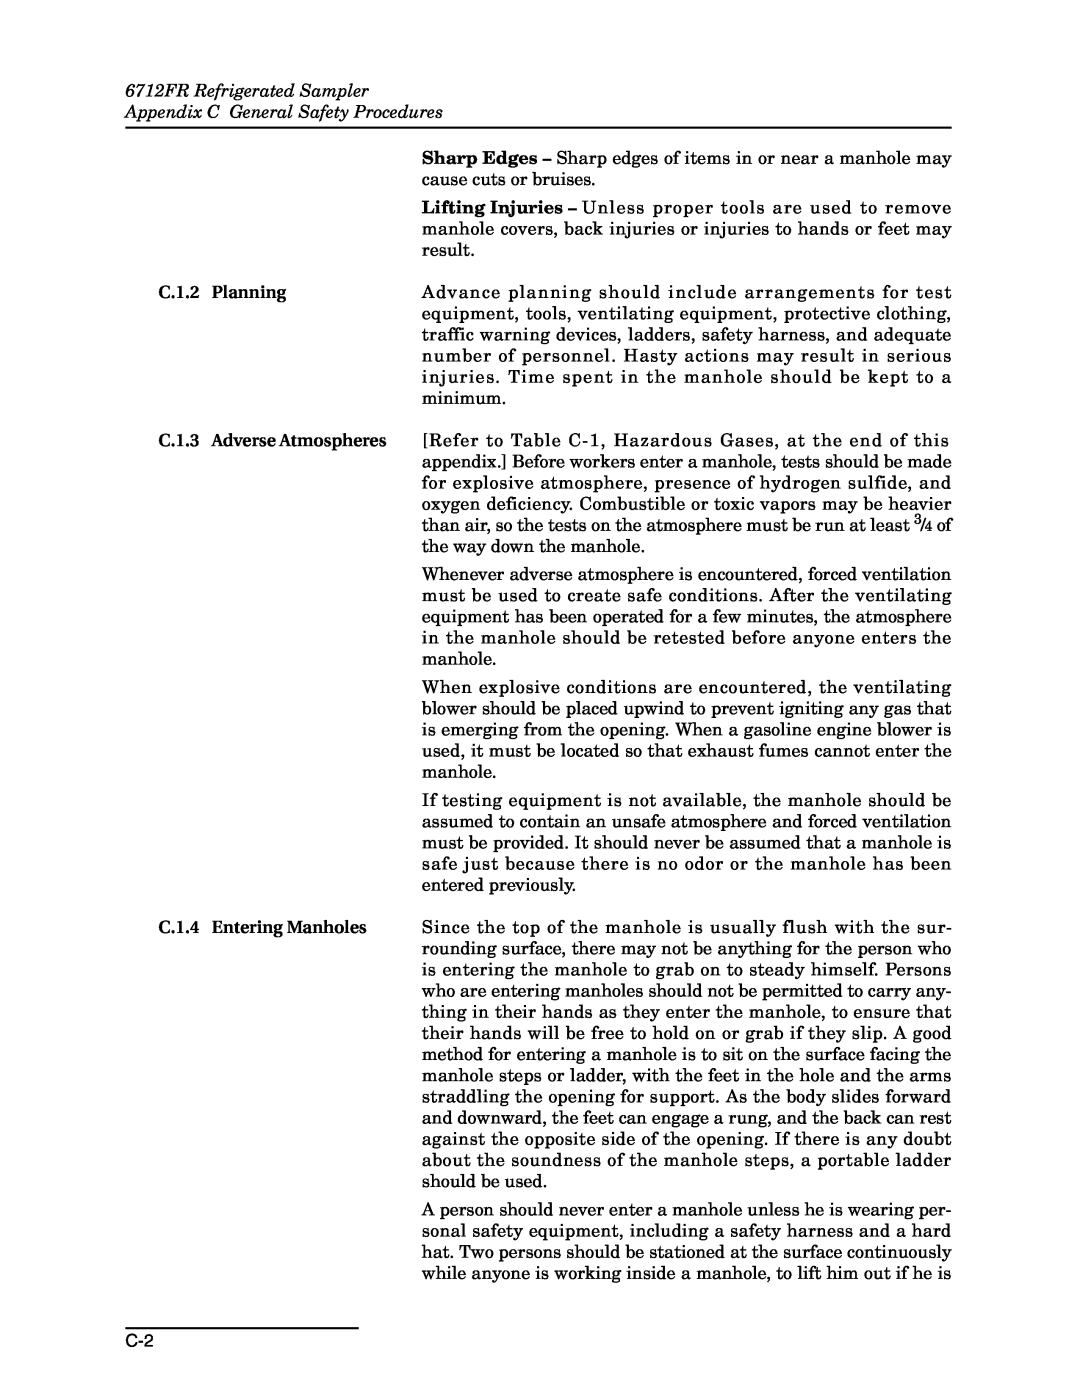 Teledyne 6712FR Refrigerated Sampler Appendix C General Safety Procedures, C.1.2, Planning, C.1.3, Adverse Atmospheres 